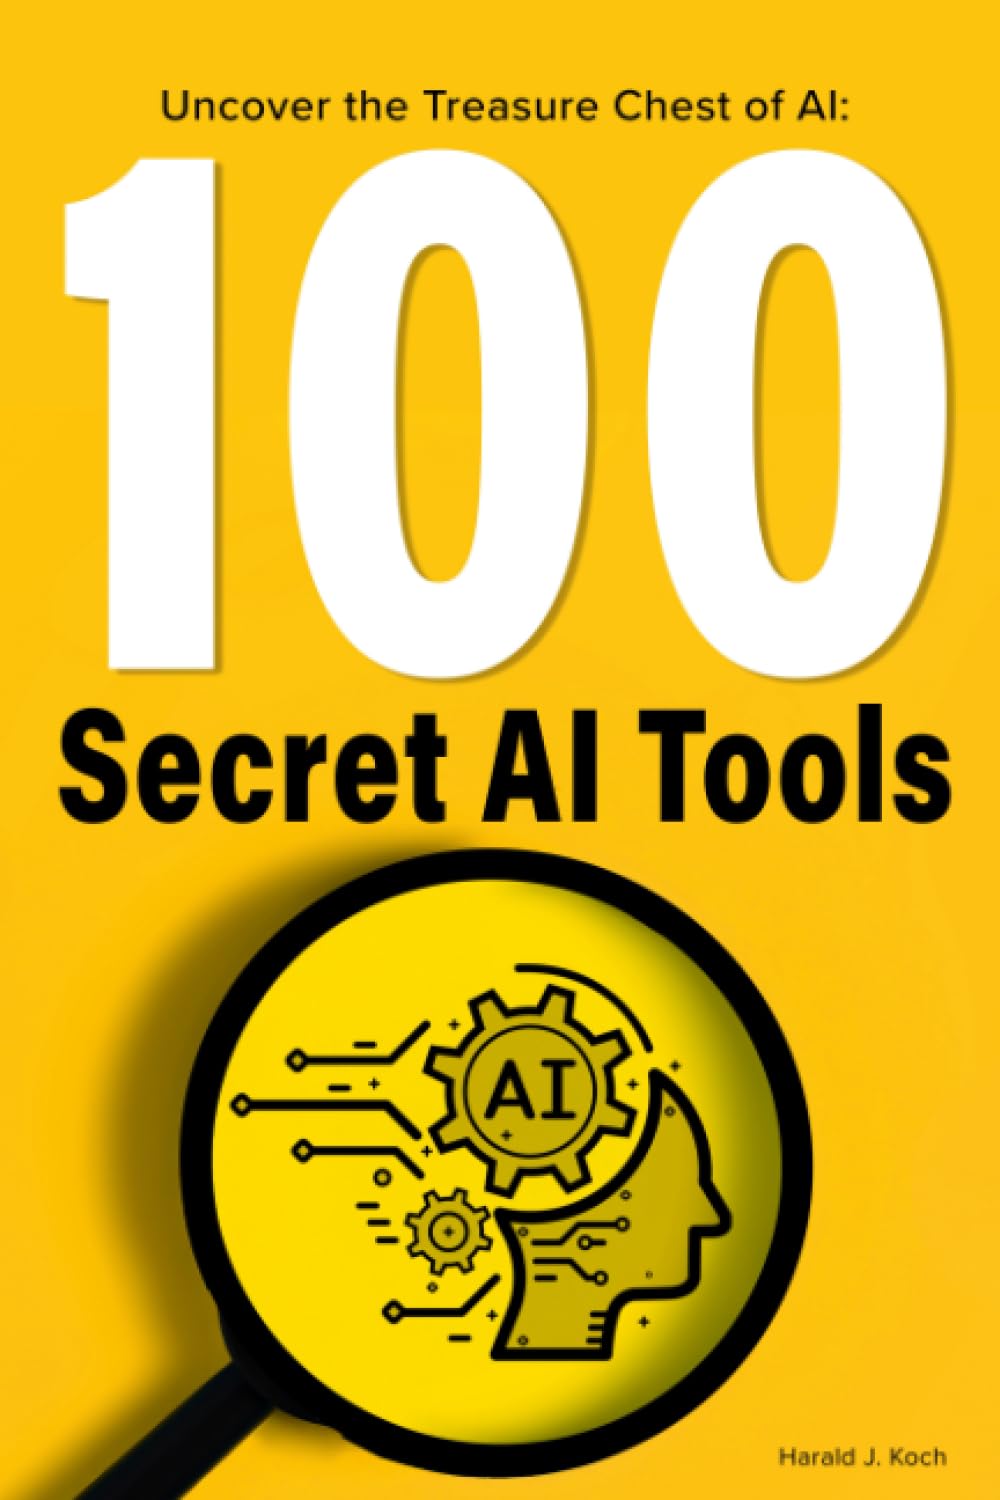 100 Secret AI Tools: Uncover the Treasure Chest of AI